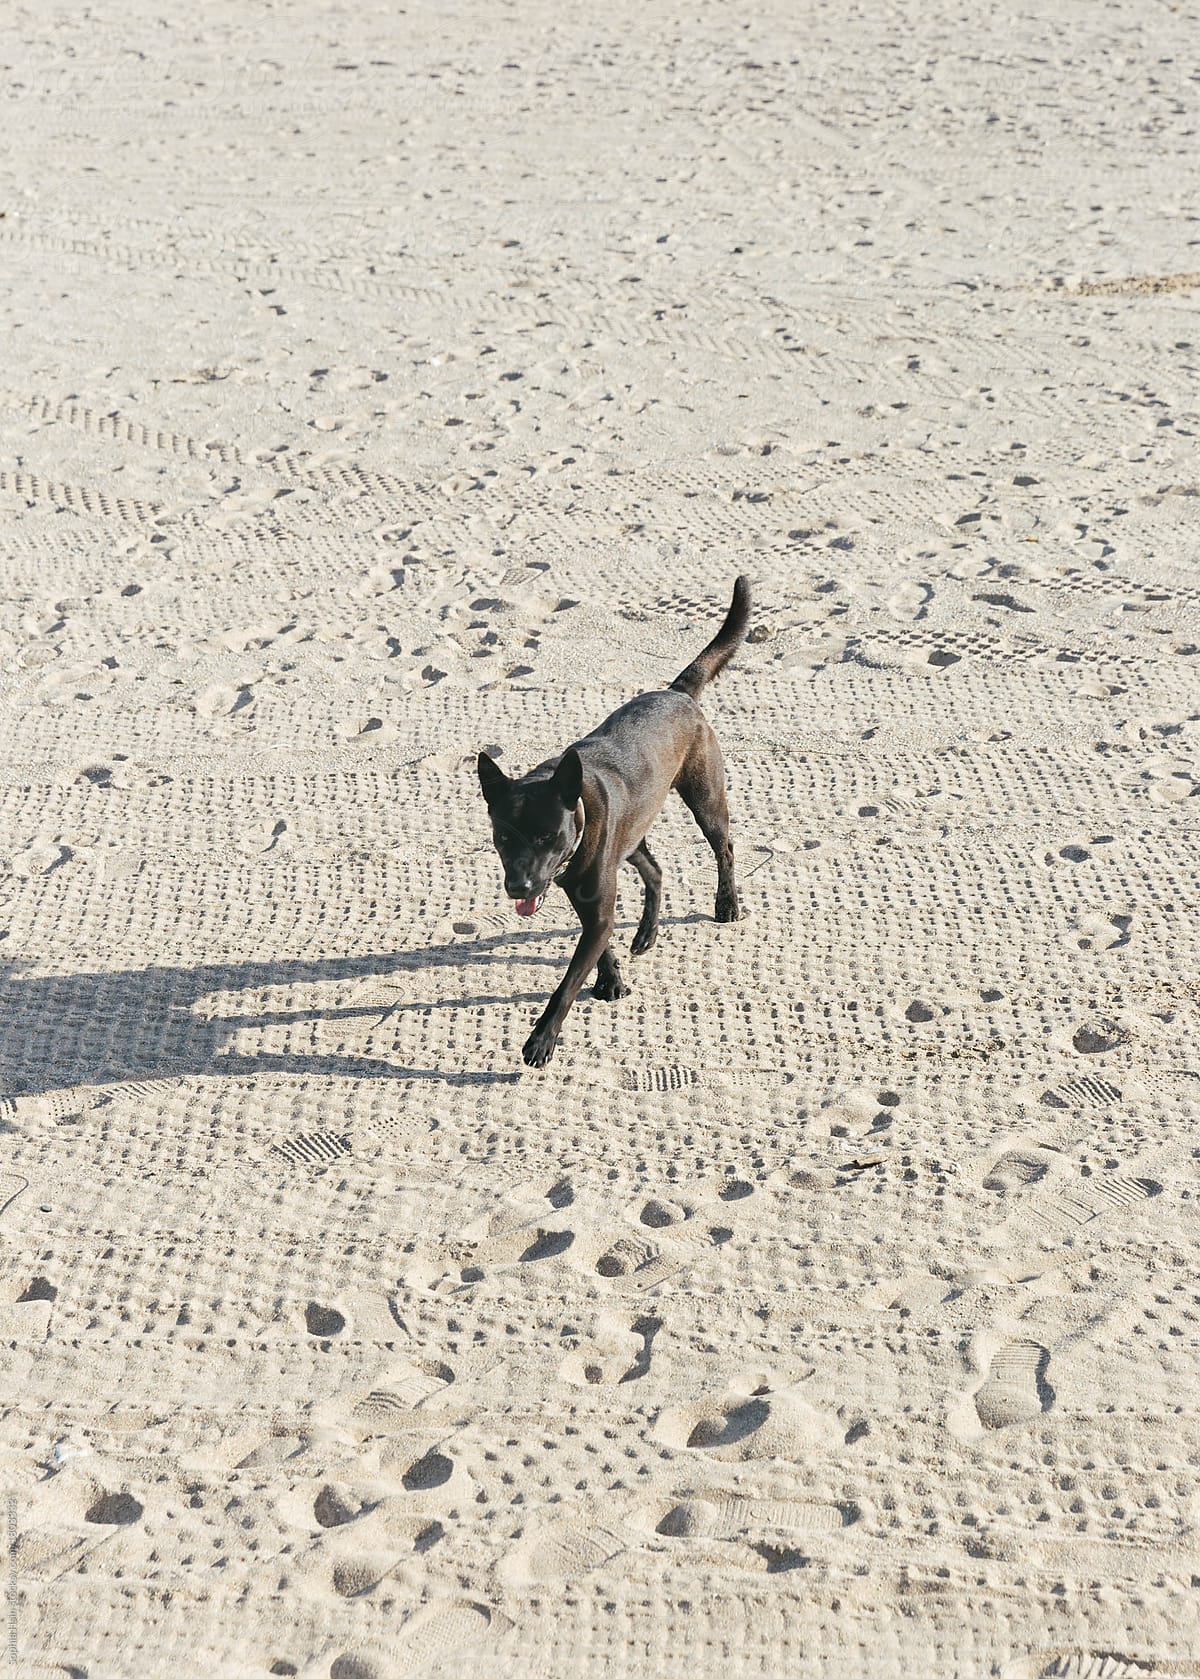 Black Dog Walking On Sand By The Beach Taiwan Kenting By Sophia Hsin Stocksy United